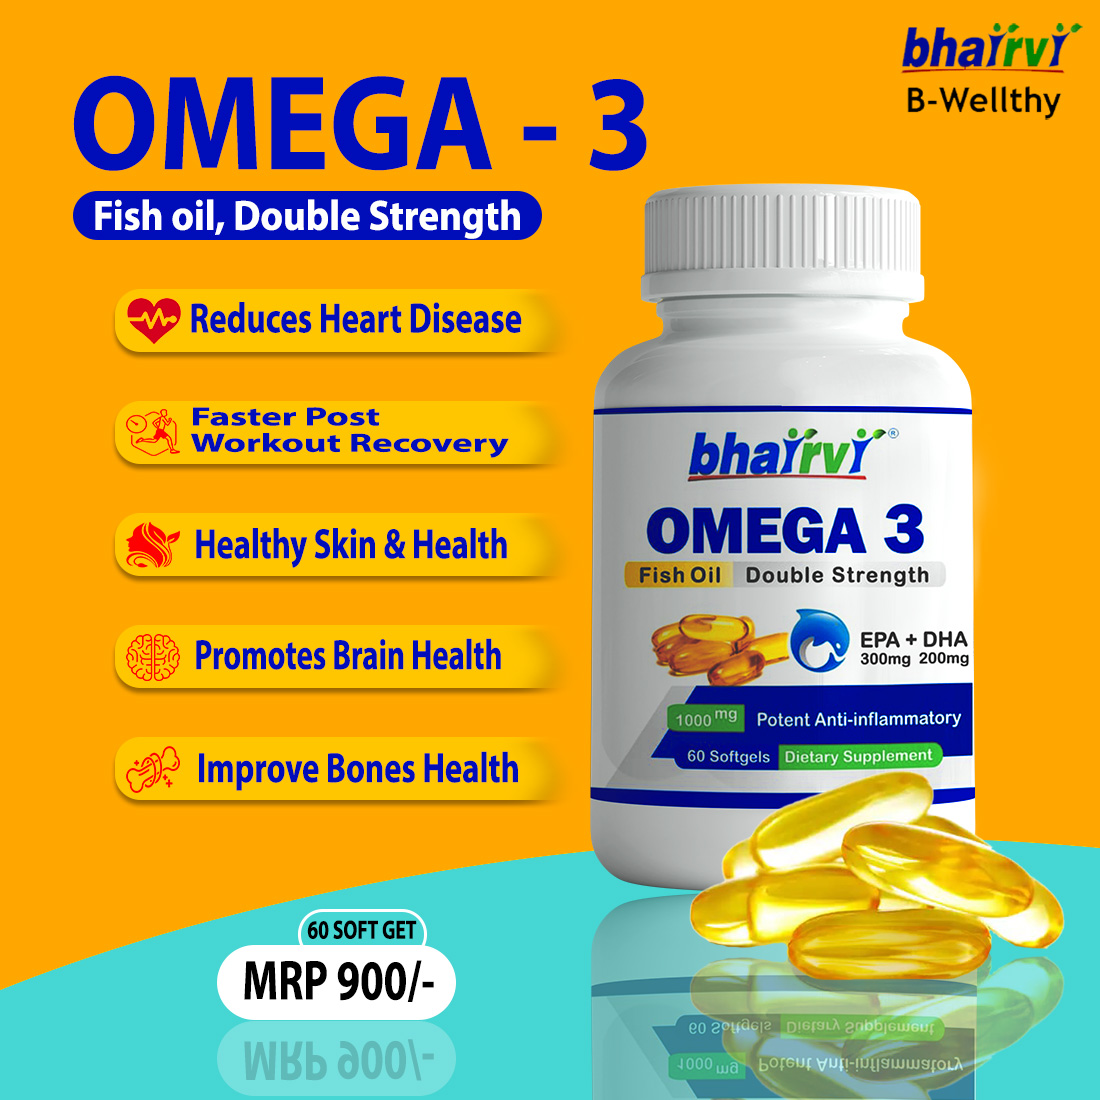 Omega - 3 Vitamin D preview image.